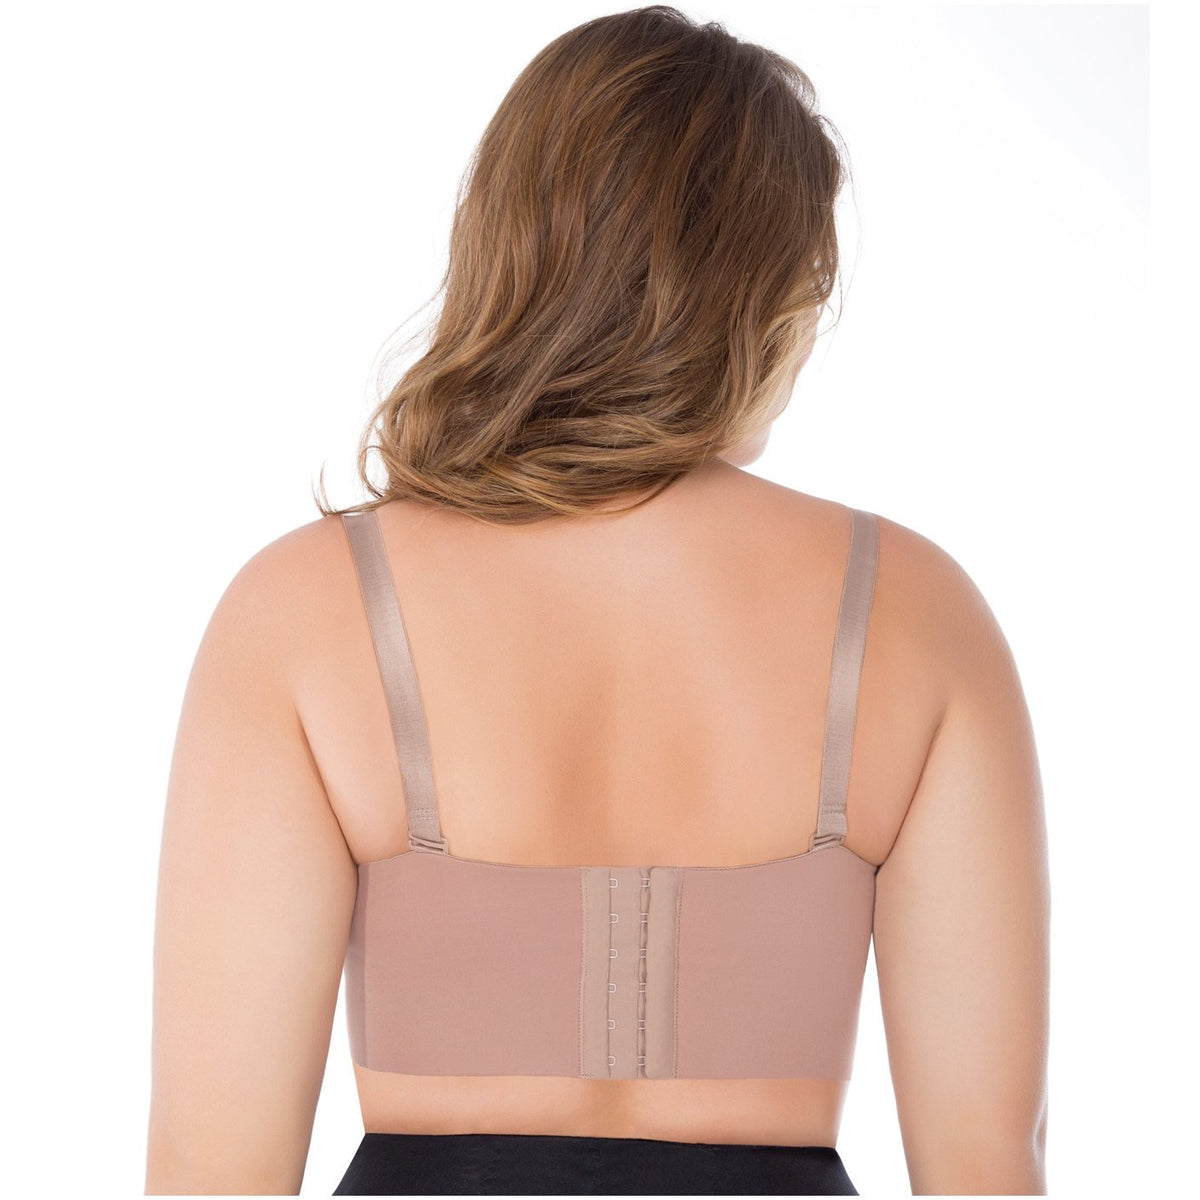 Wide strap push support bra – Gorgeous Clientele VIP